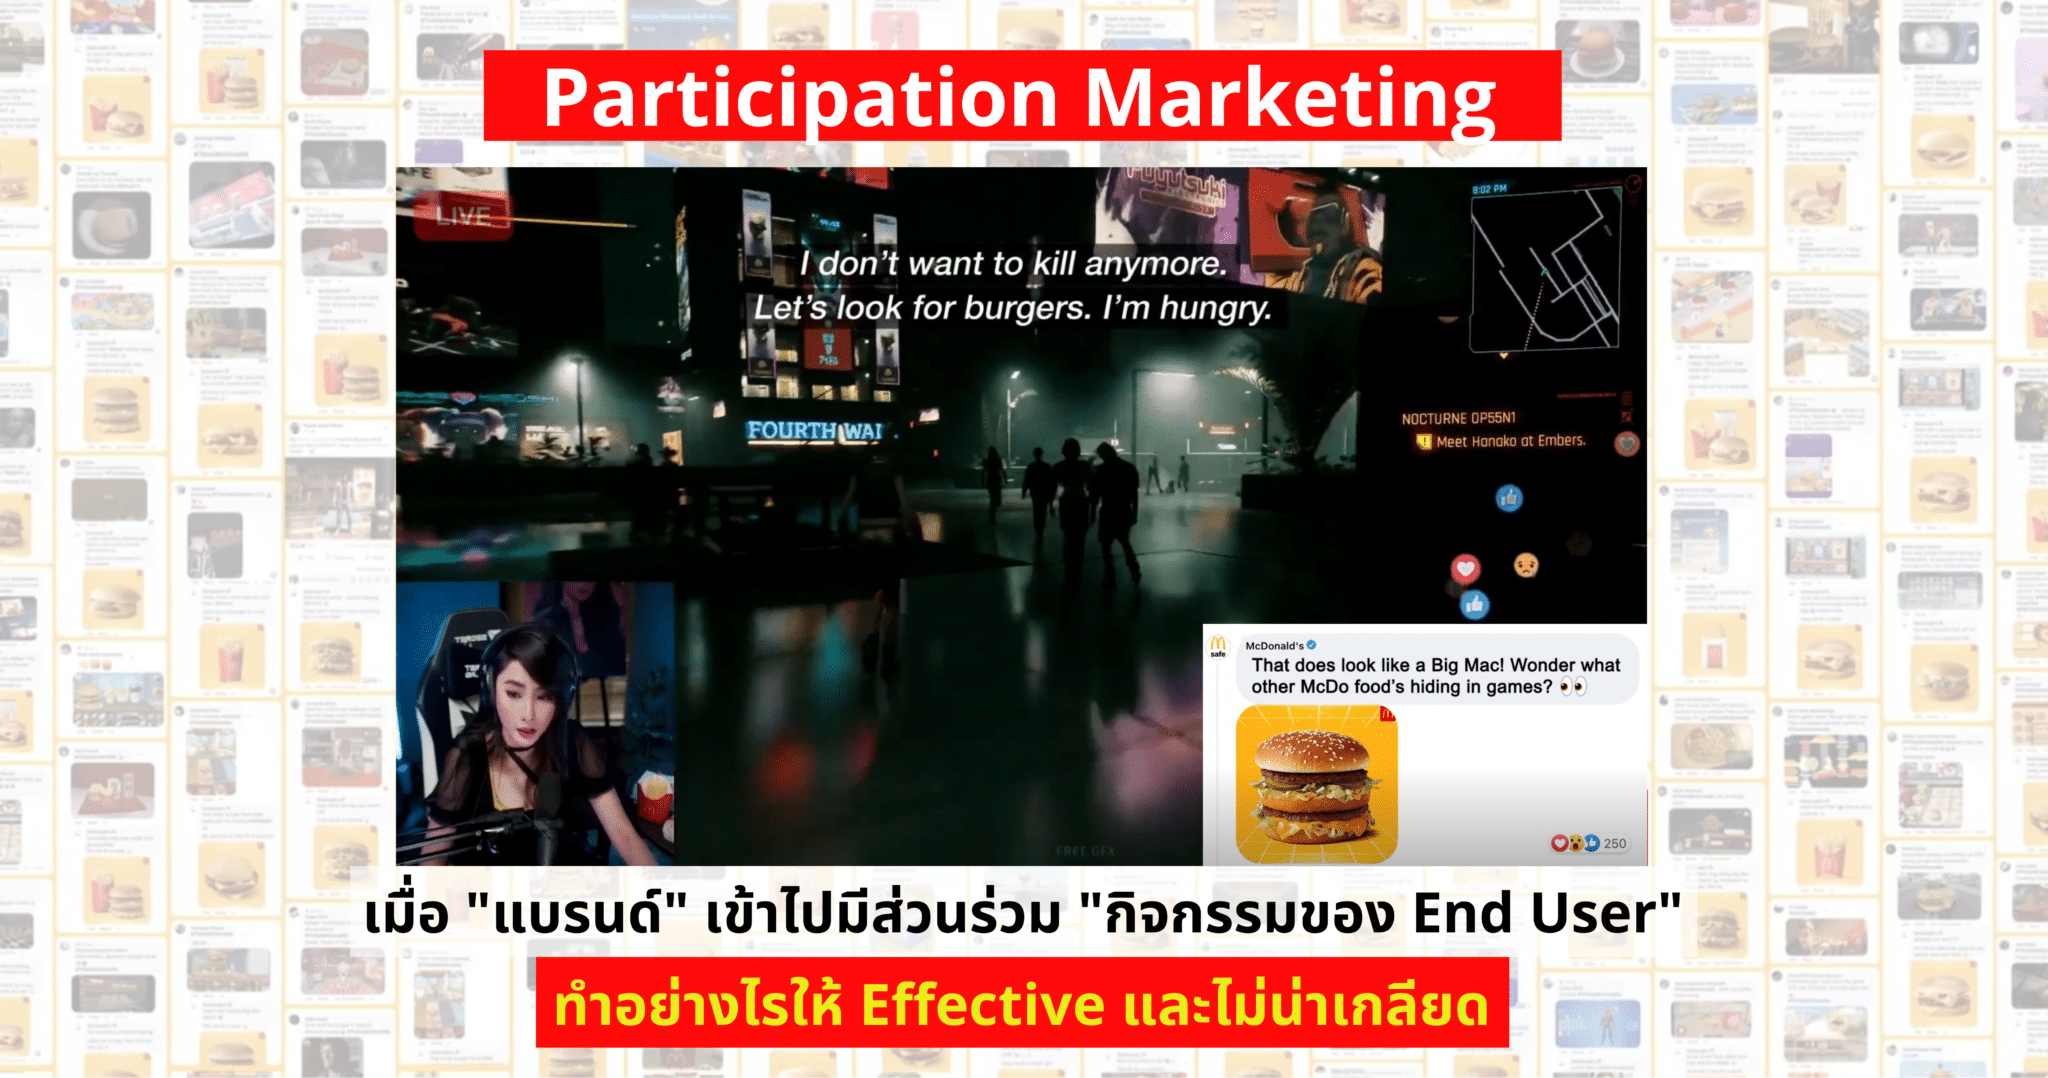 Participation Marketing เมื่อแบรนด์เข้าไปร่วมกิจกรรมของ End User